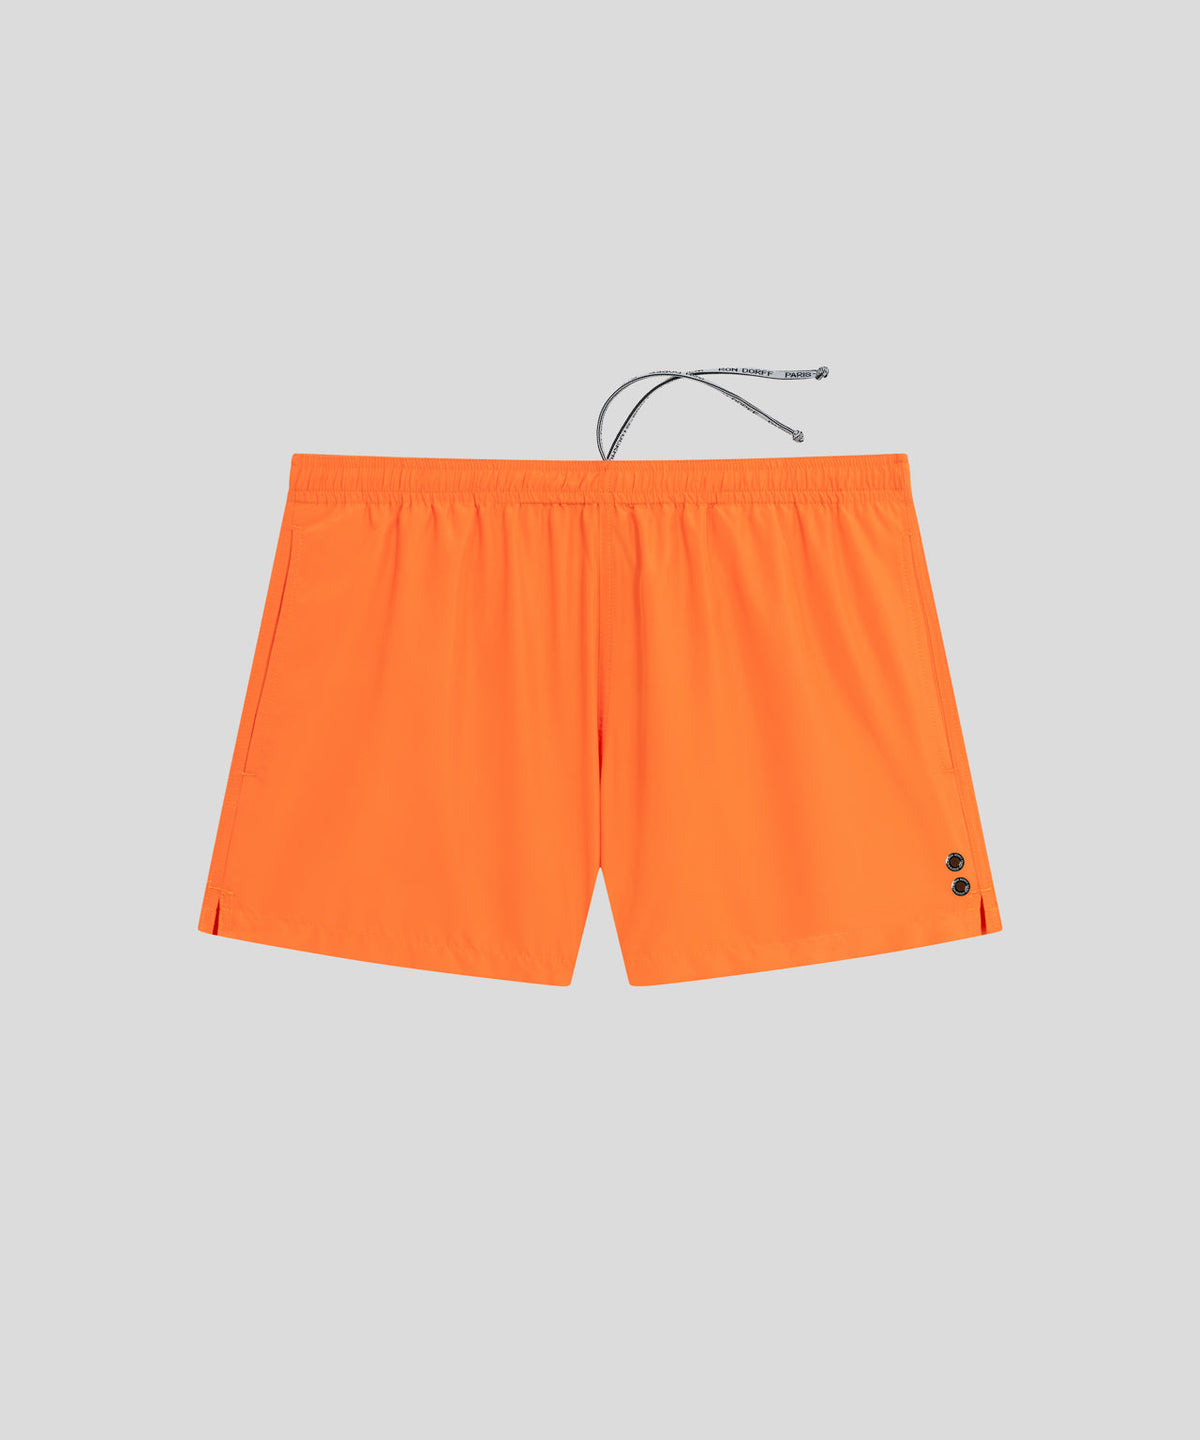 Swim Shorts: Spritz Orange